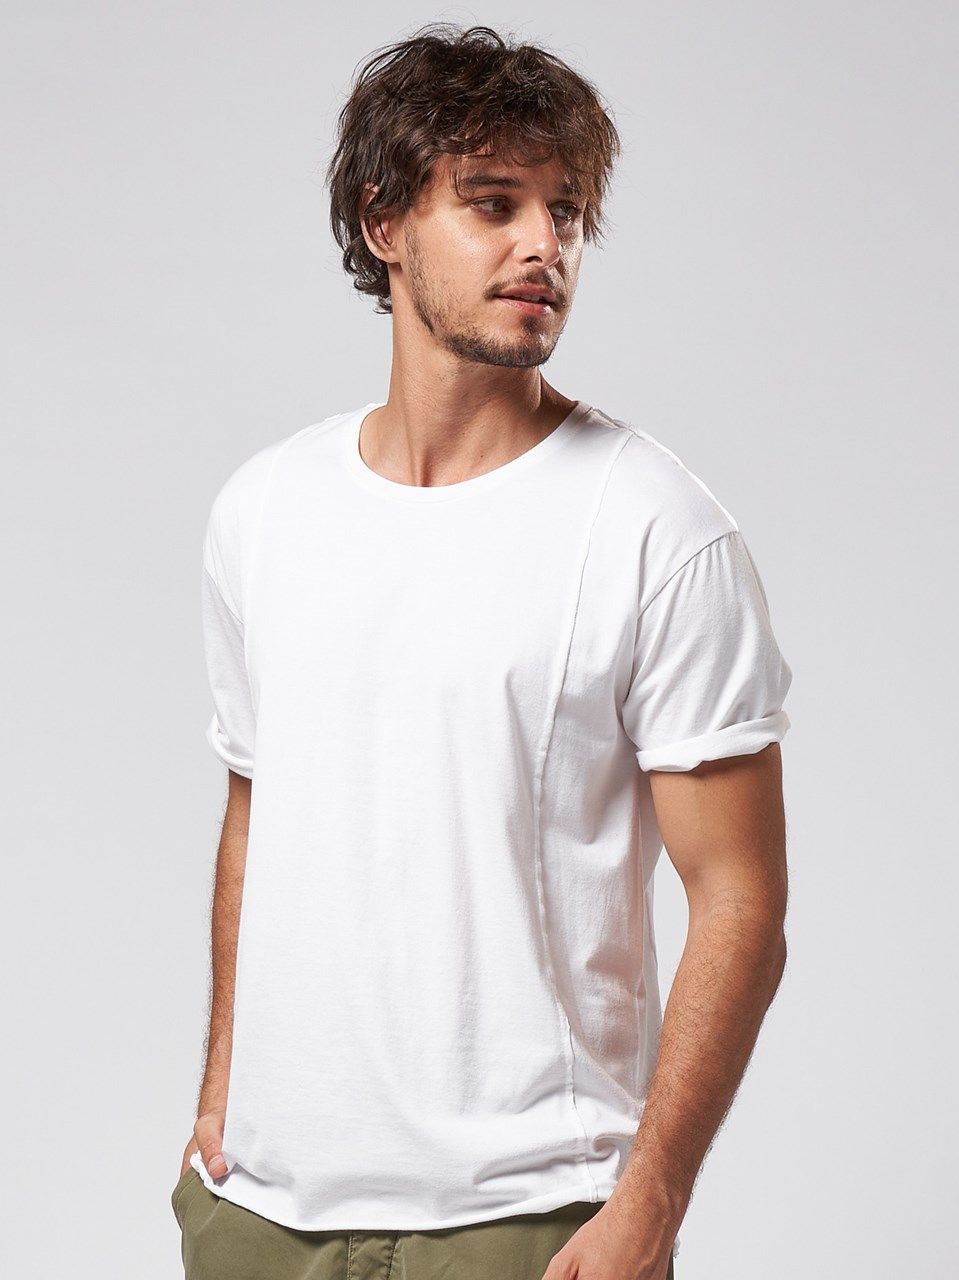 wjk - 《予約品》 roll-up sleeve cut&sewn / Tシャツ / ホワイト | BRYAN